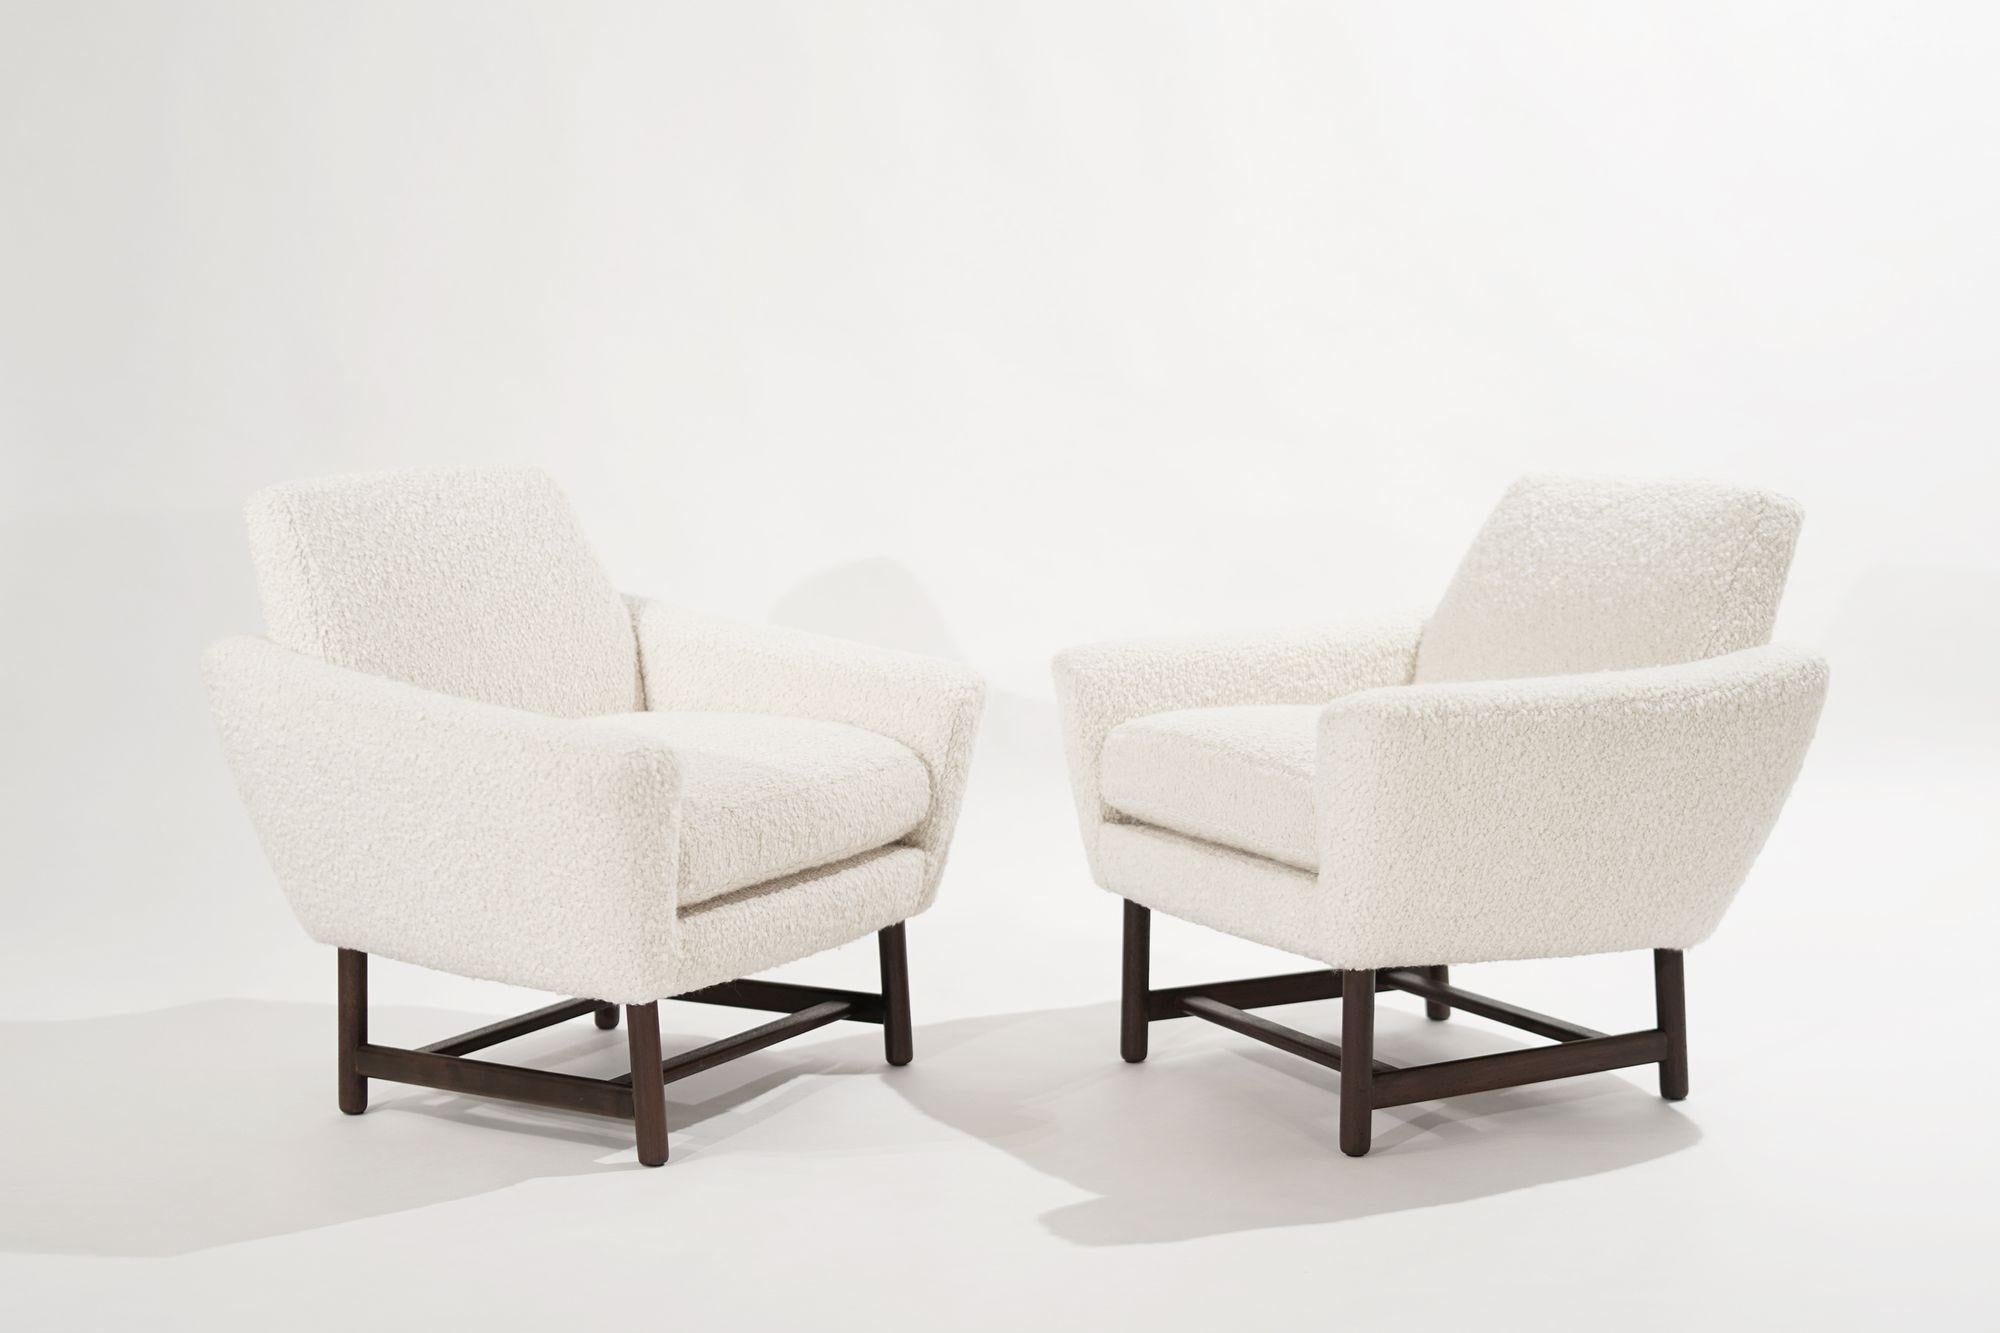 Scandinavian Modern Sculptural Low-Profile Lounge Chairs in Bouclé, Denmark, 1950s For Sale